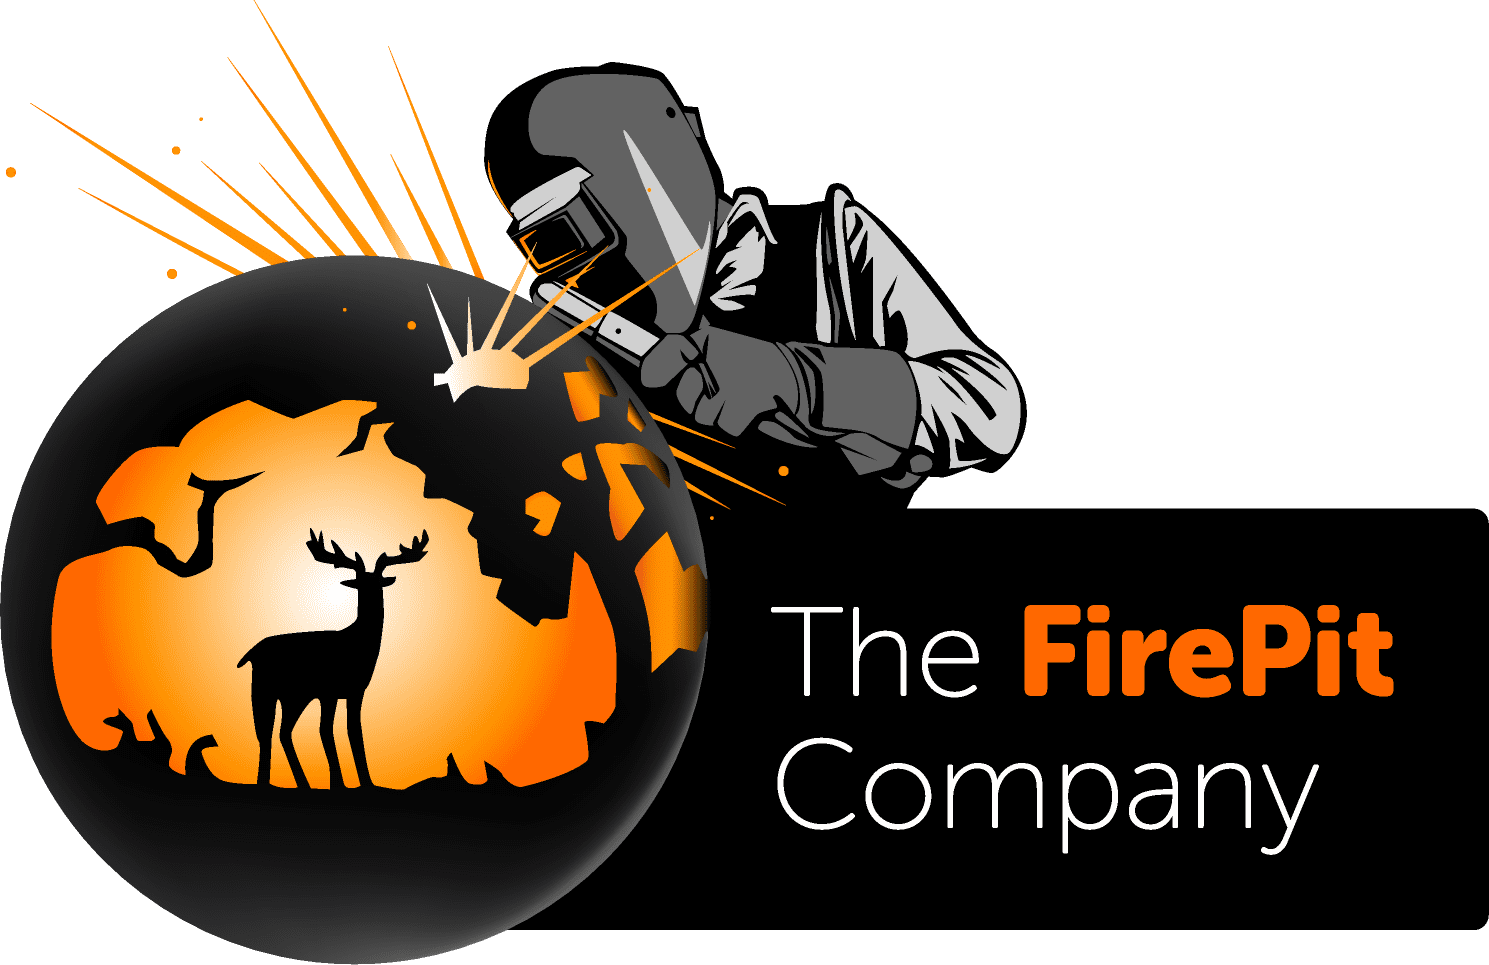 The Fire Pit Company logo